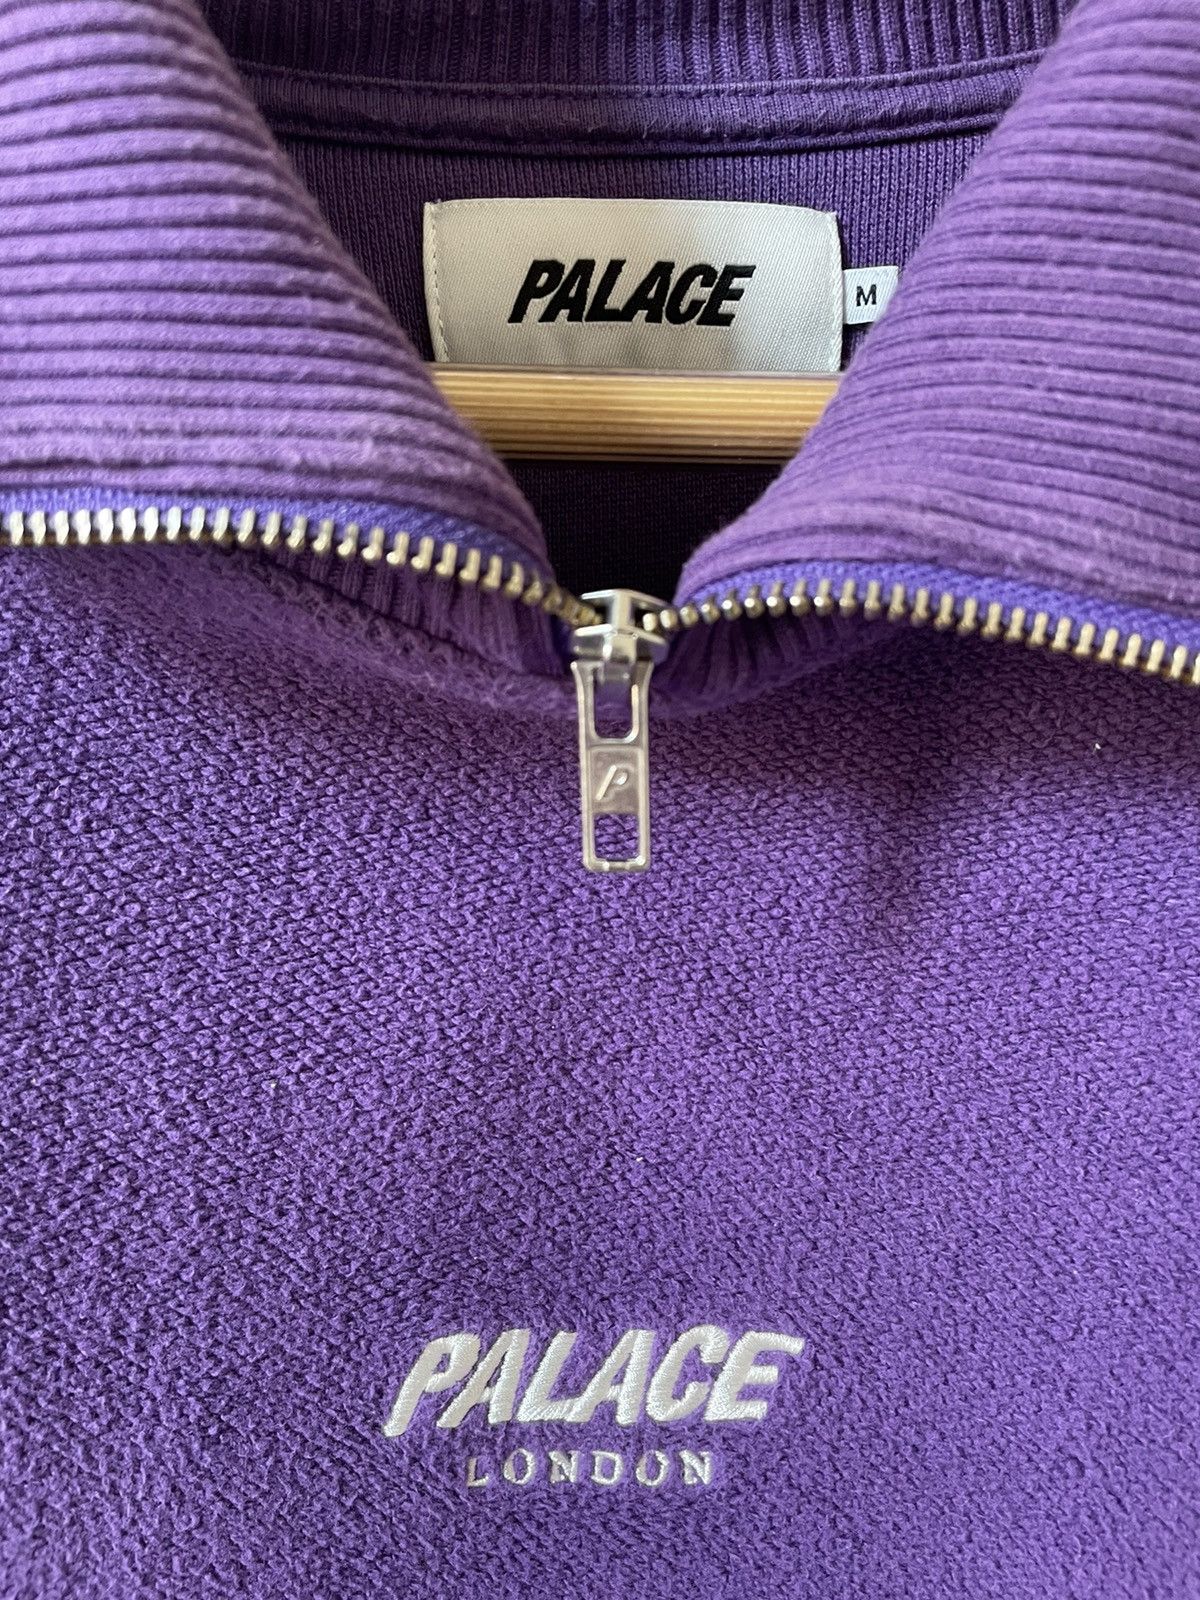 Palace Palace Half Zip Sweater Size US M / EU 48-50 / 2 - 2 Preview